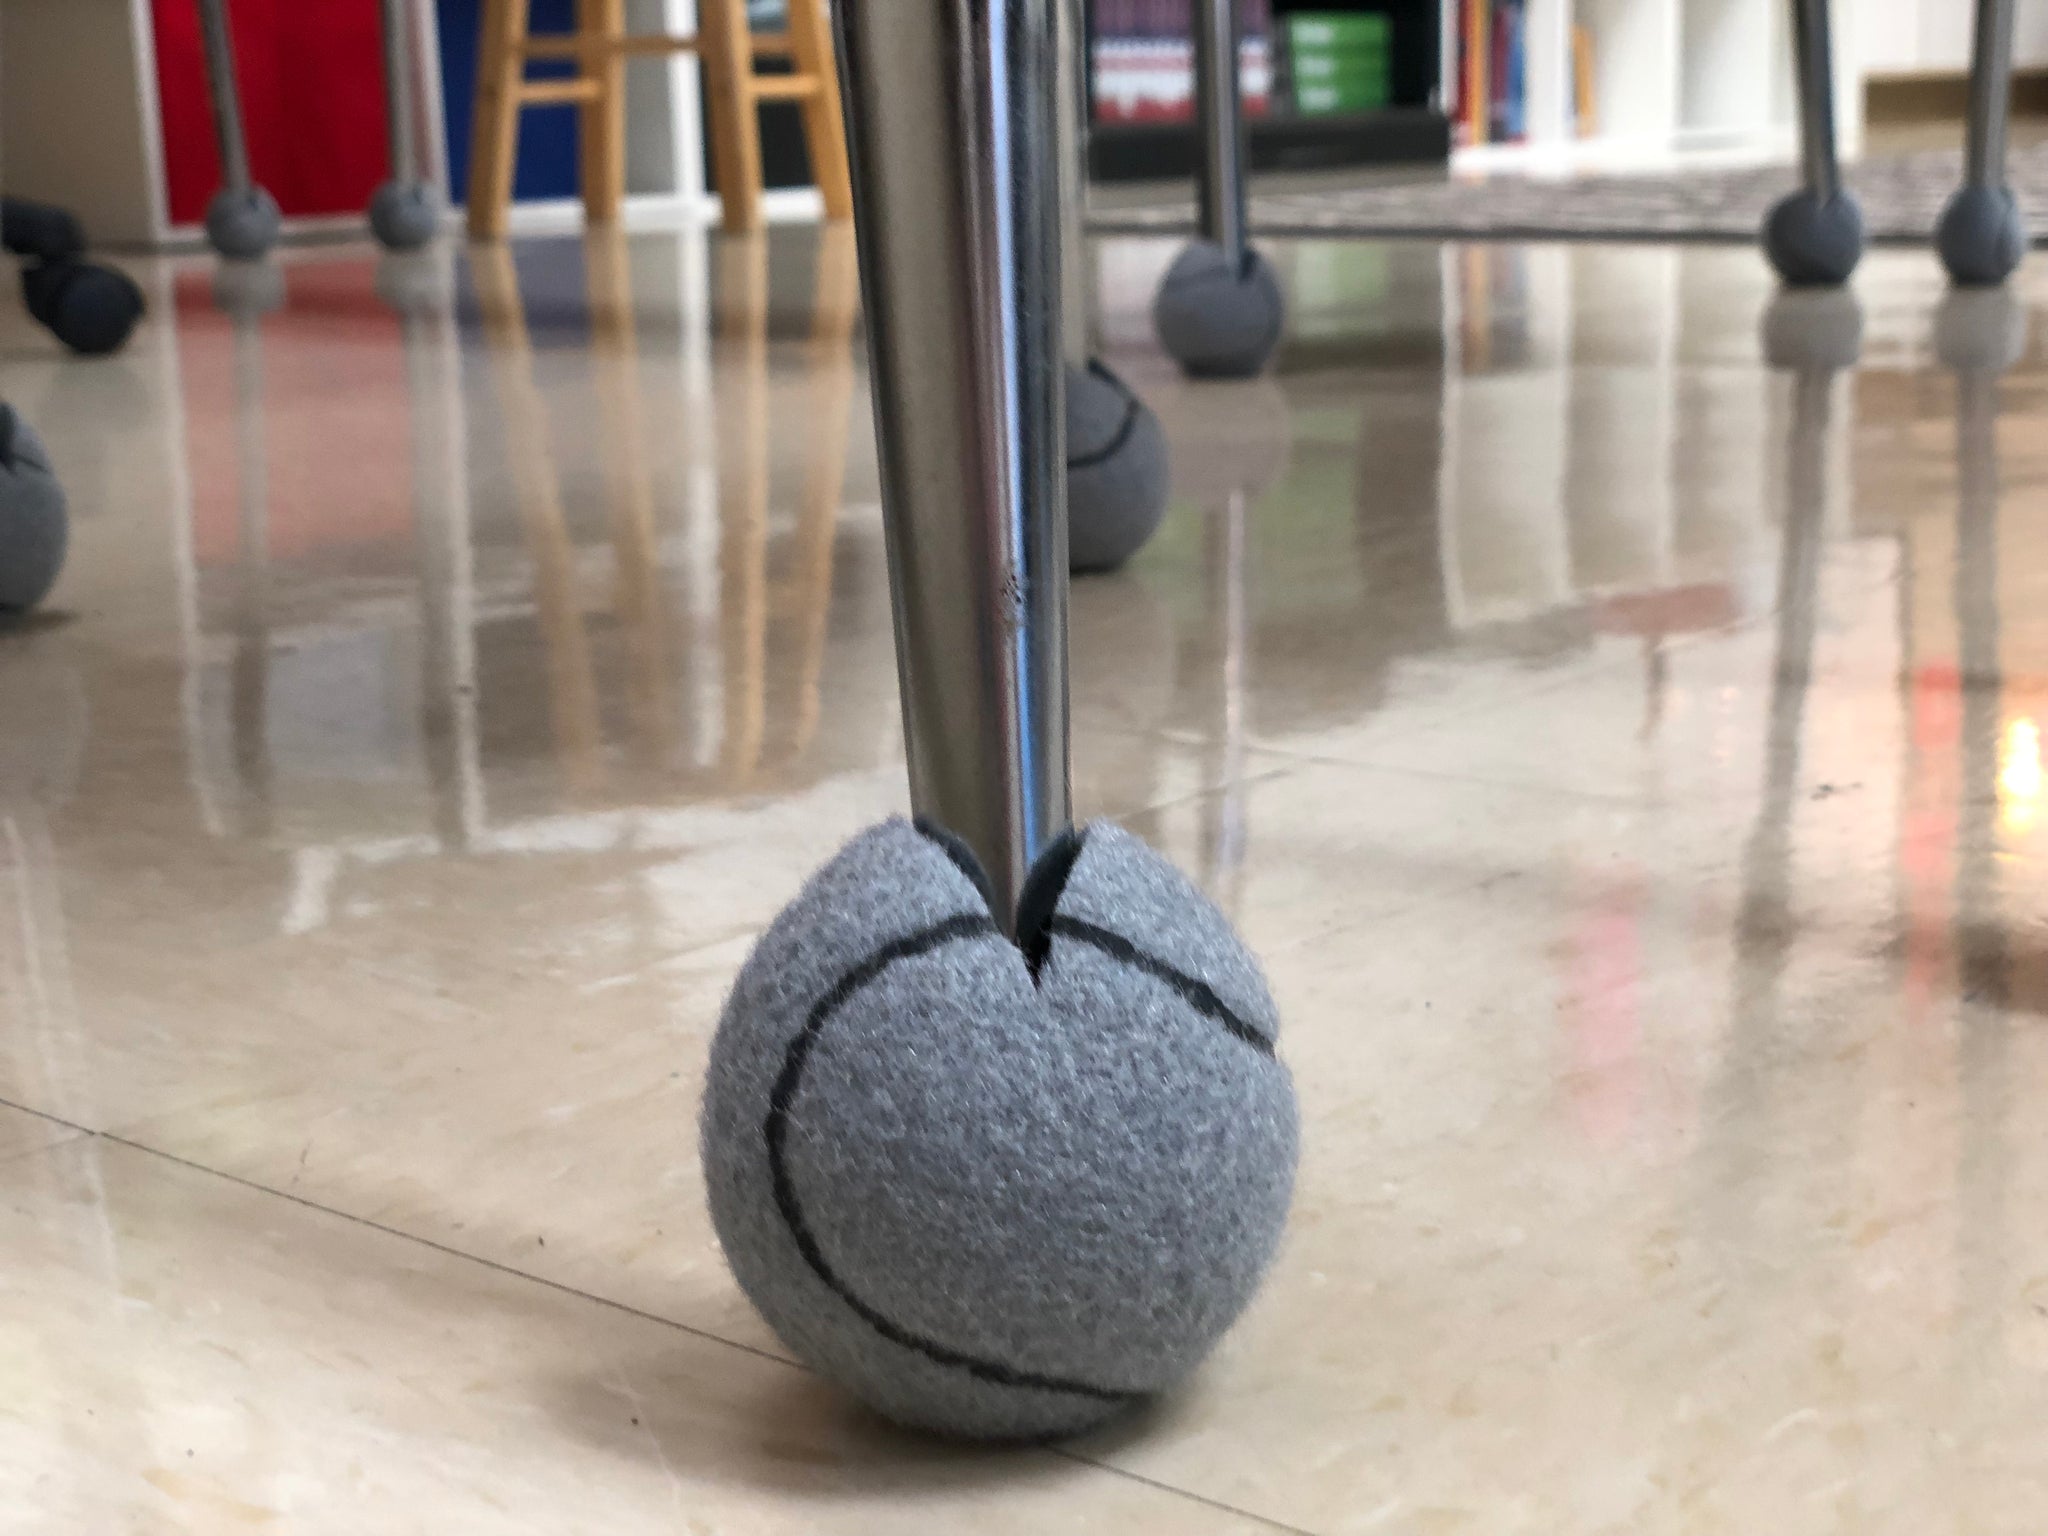 Standard (Tennis Balls Size) Furniture Balls - Grey - 20 Count